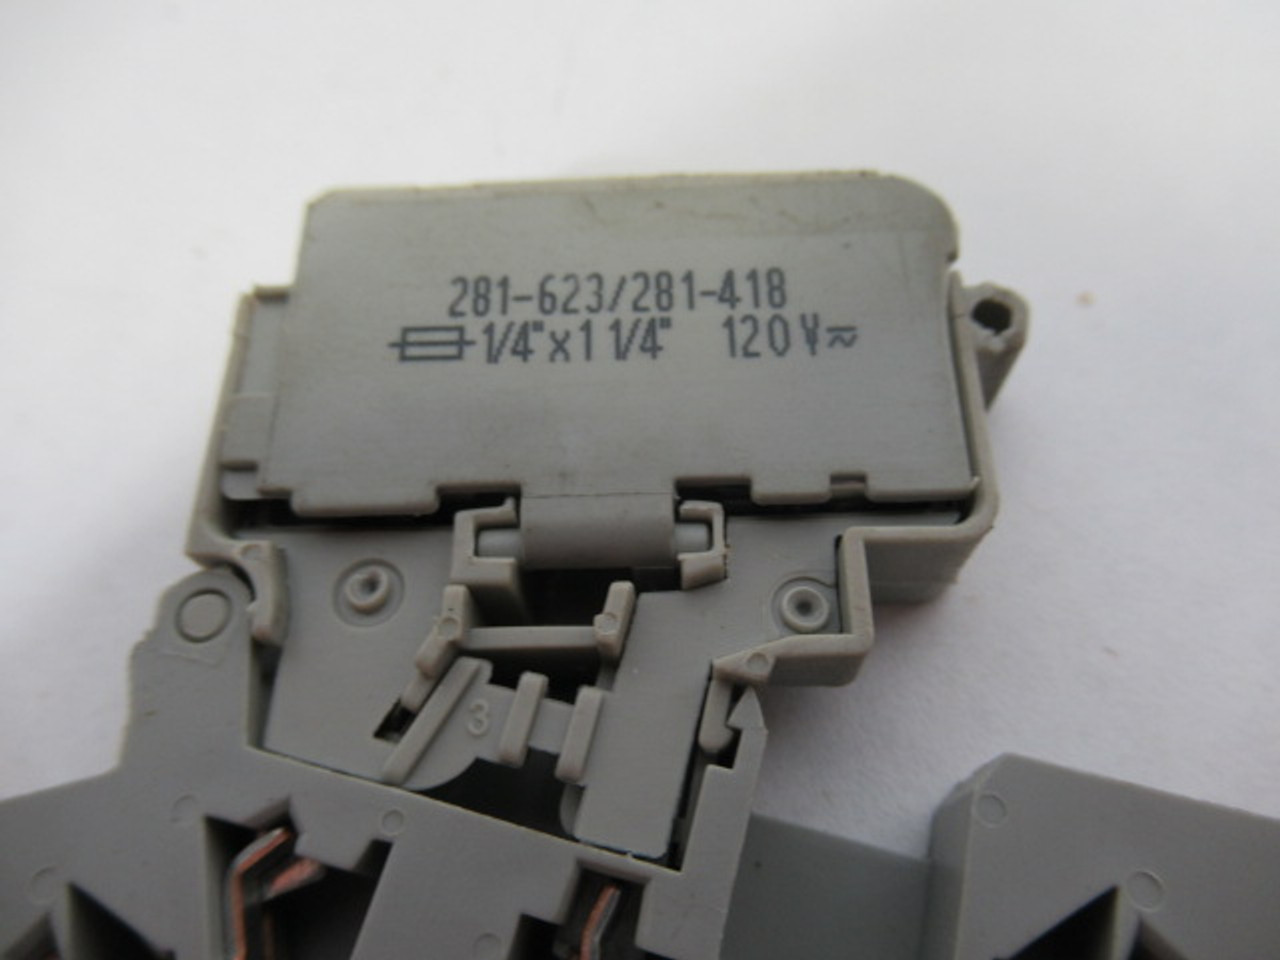 Wago 281-623/281-418 2 Conductor Fused Terminal Block W/ LED USED